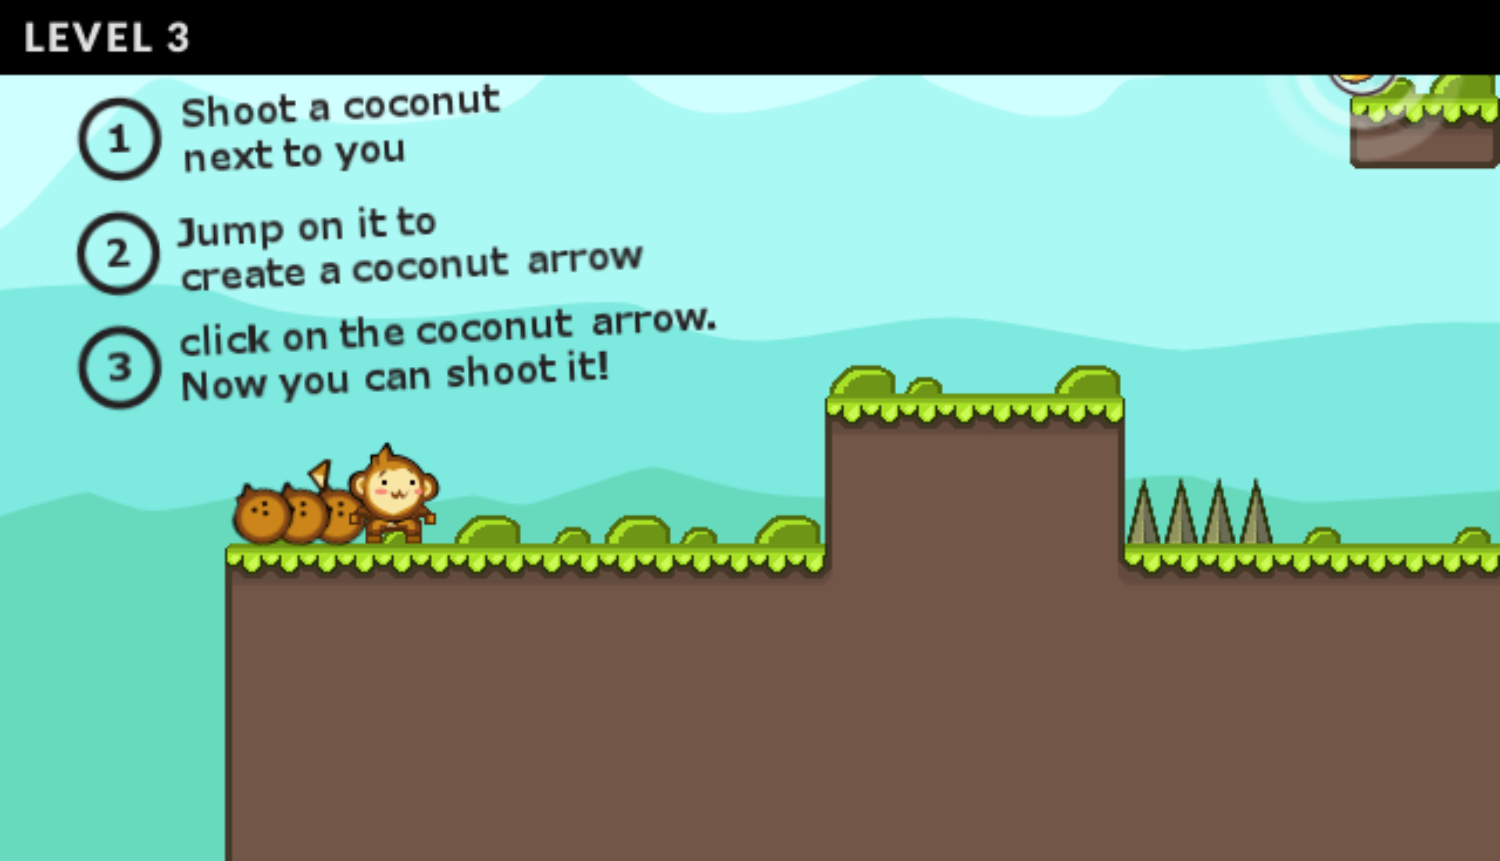 Coco Monkey Game Coconut Arrow Instructions Screen Screenshot.